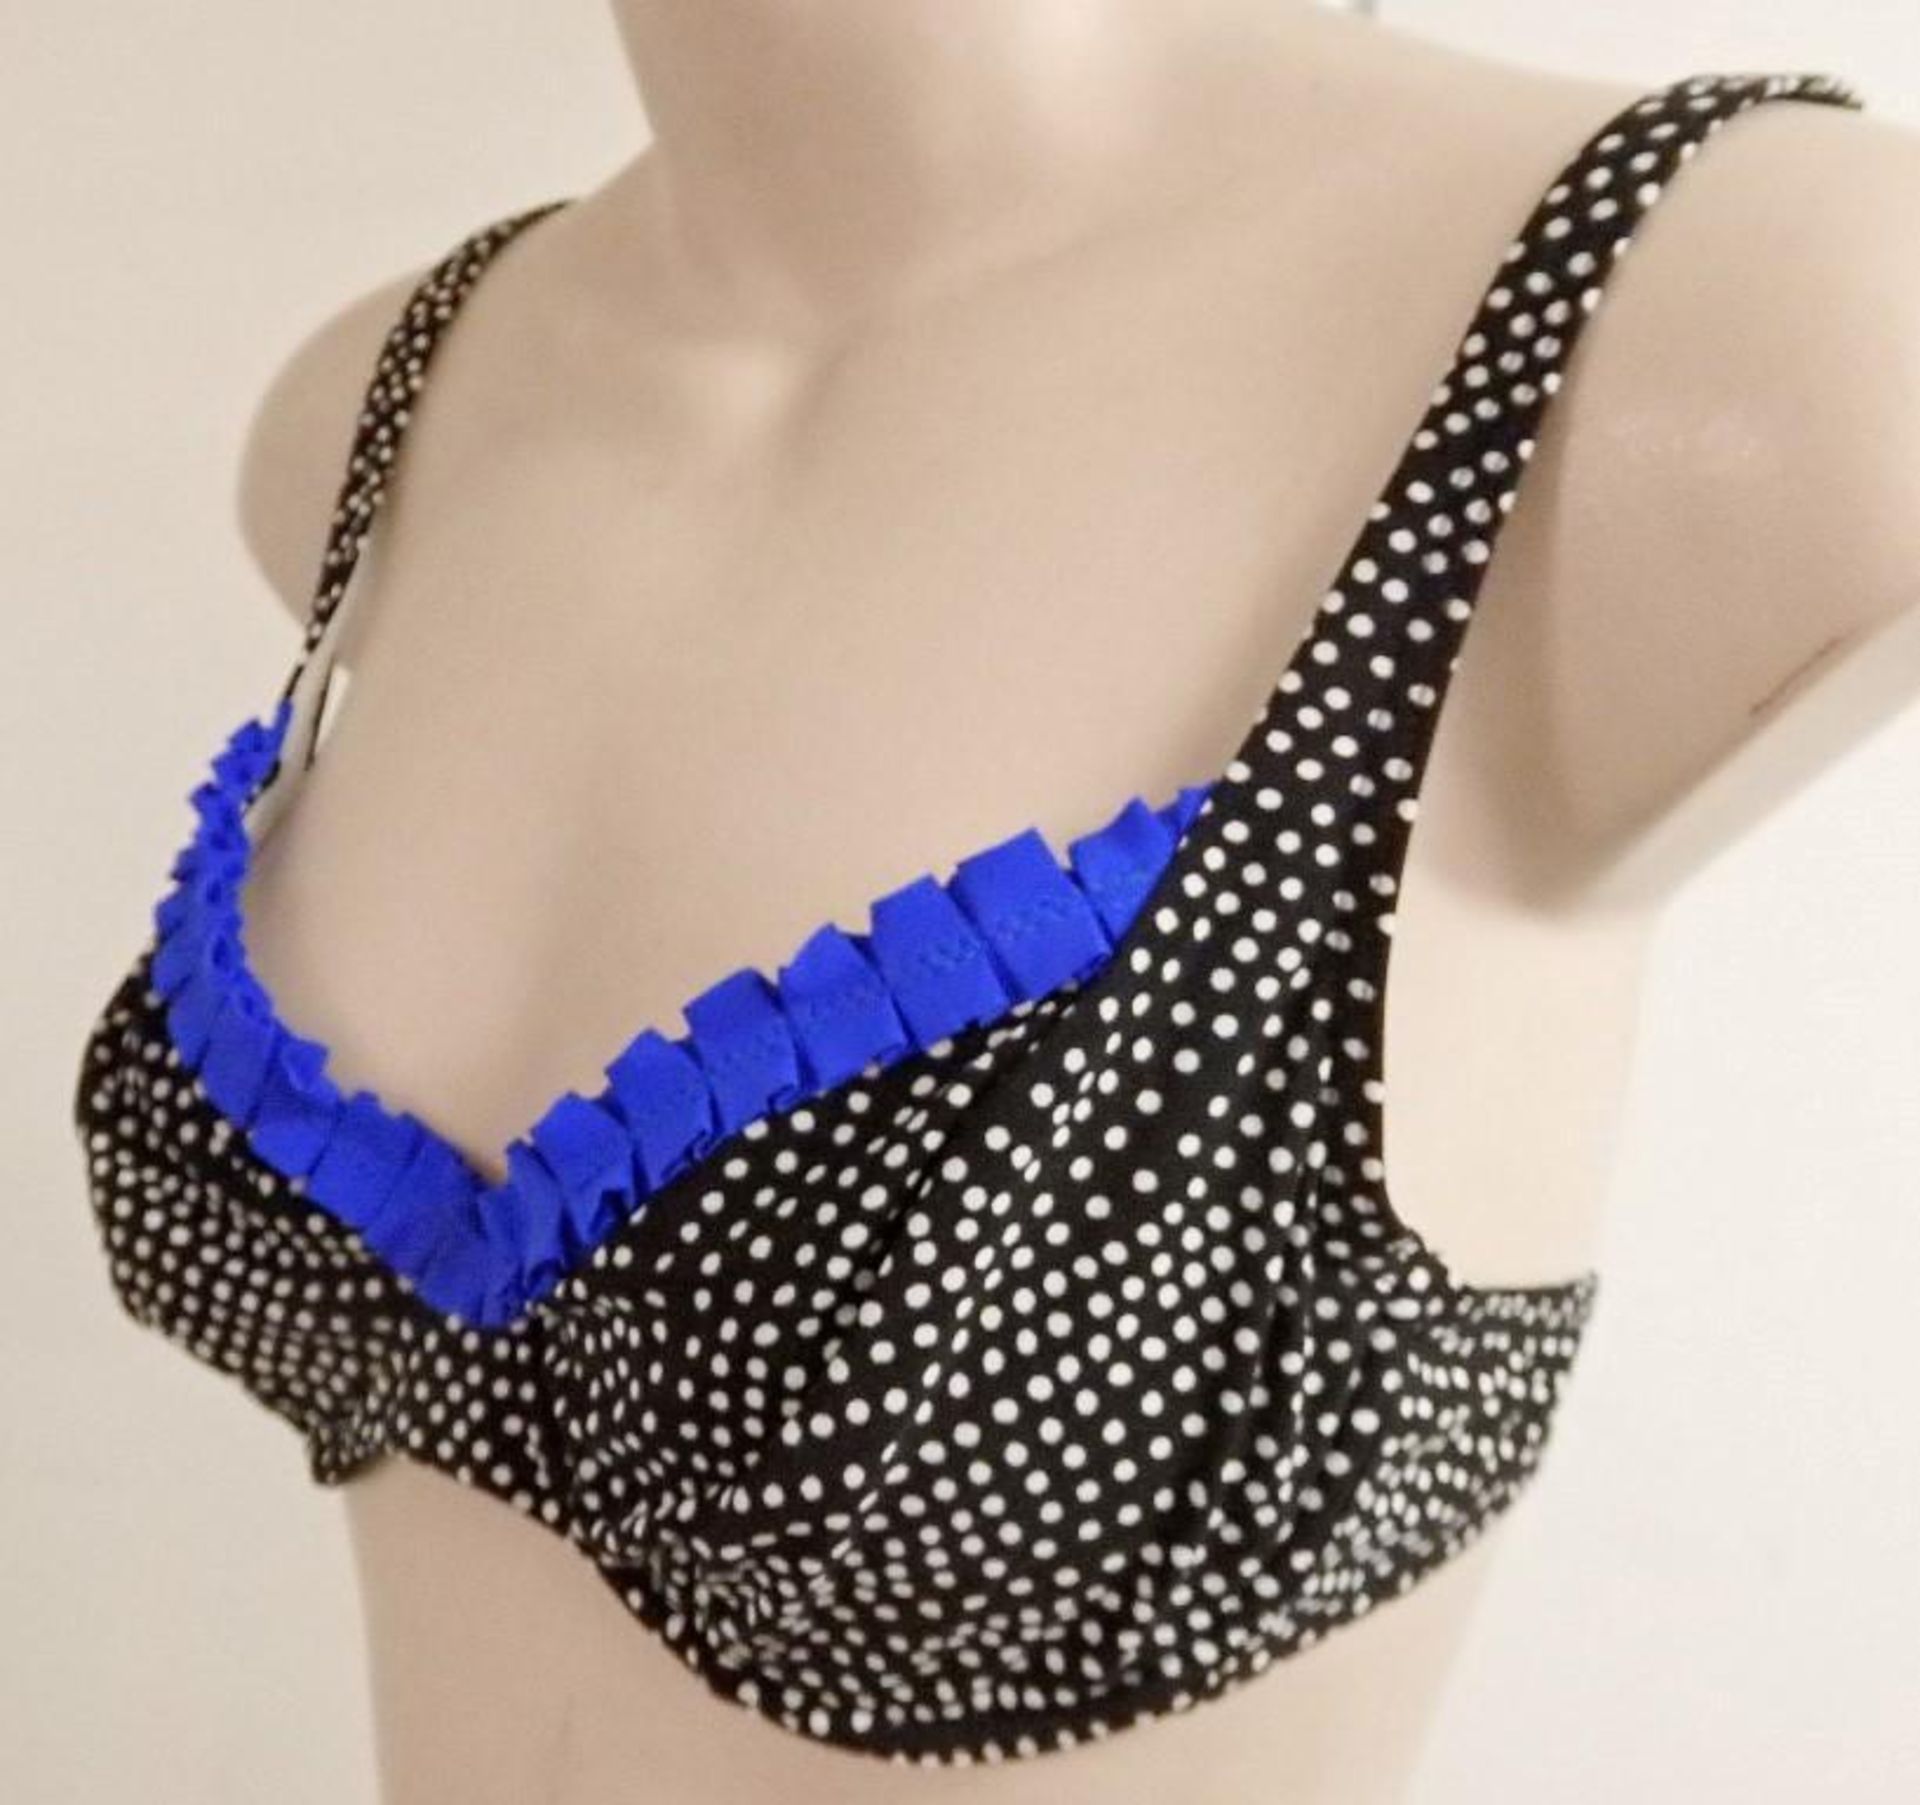 1 x Rasurel - Black Polka dot with royal blue trim &frill Tobago Bikini - B21068 - Size 2C - UK 32 - - Image 3 of 10